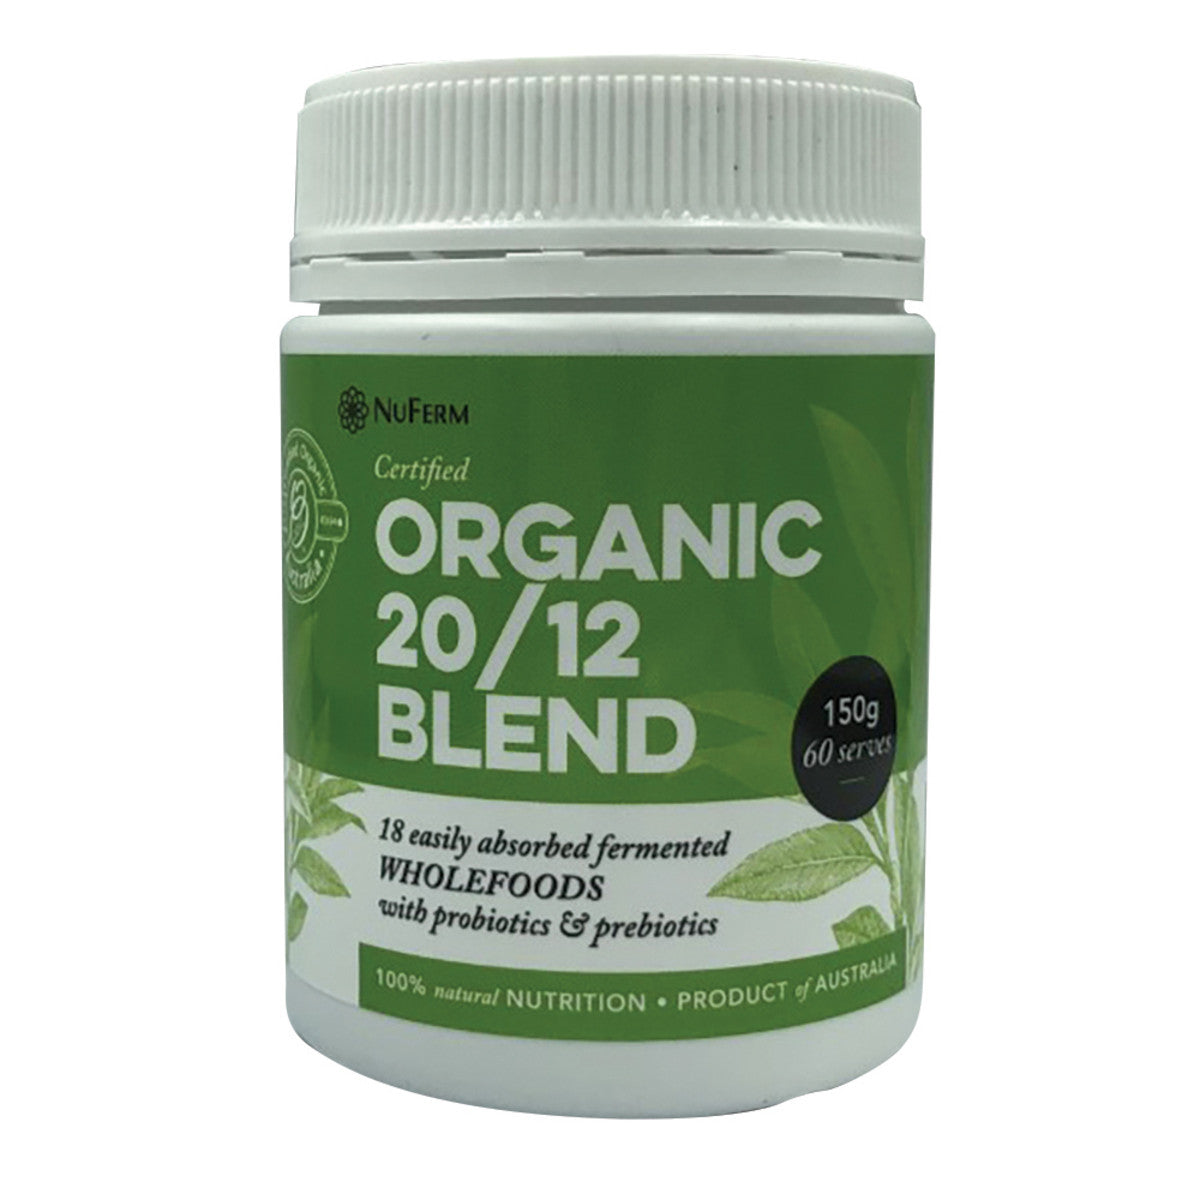 NuFerm (Nattrition) Organic 2012 Blend Powder 150g